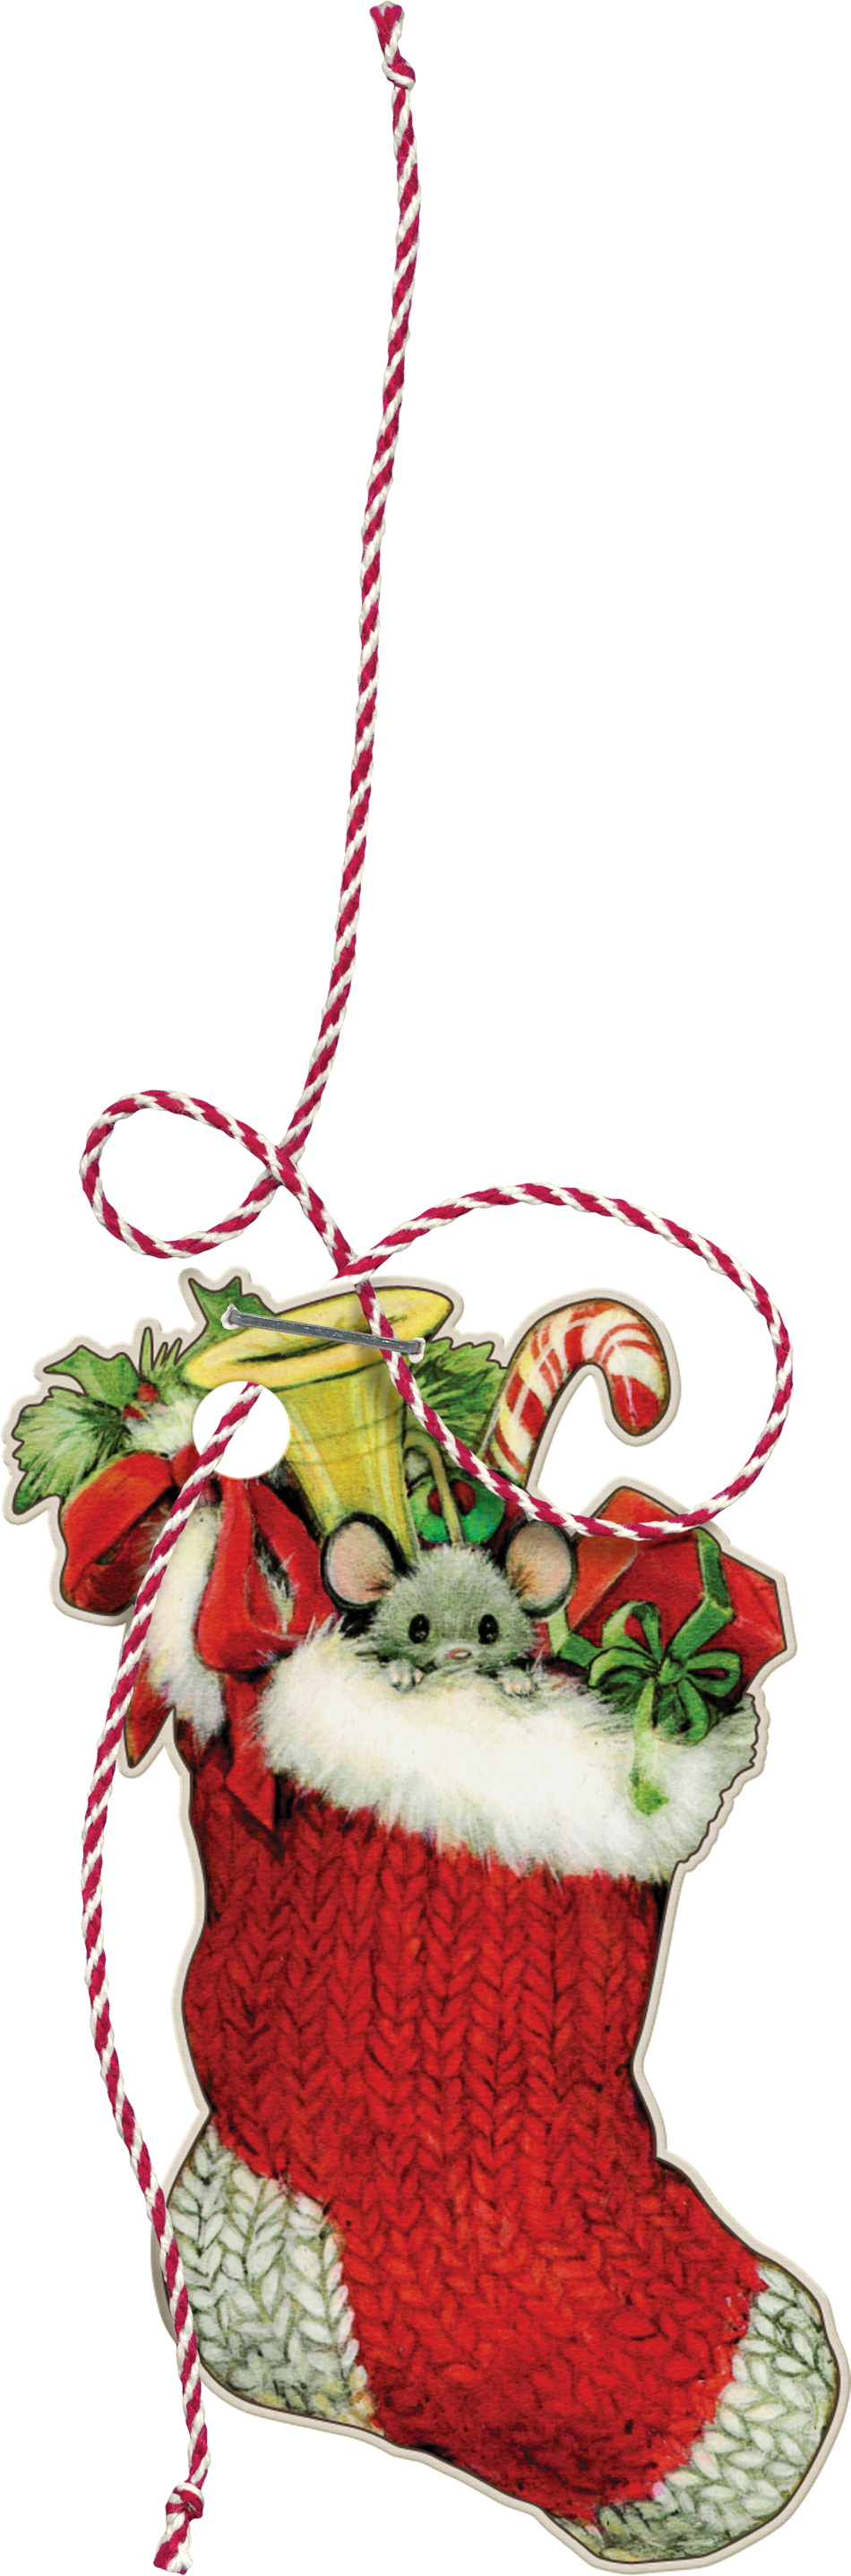 Ornament Christmas Socks Free HQ Image Clipart